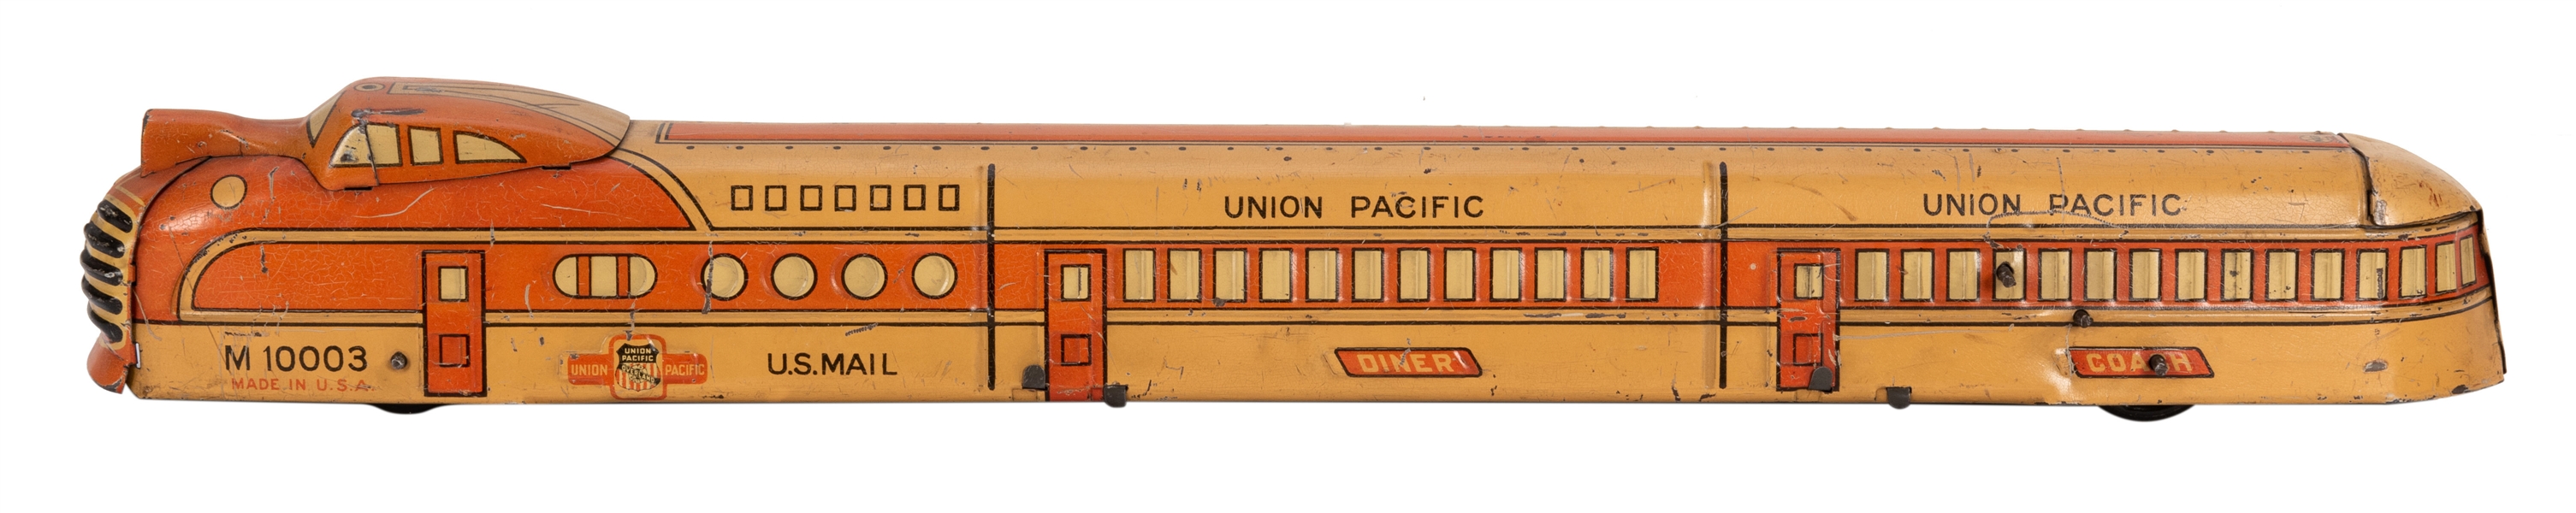  Union Pacific M-10003 Diesel Passenger Floor Train. 1930s.